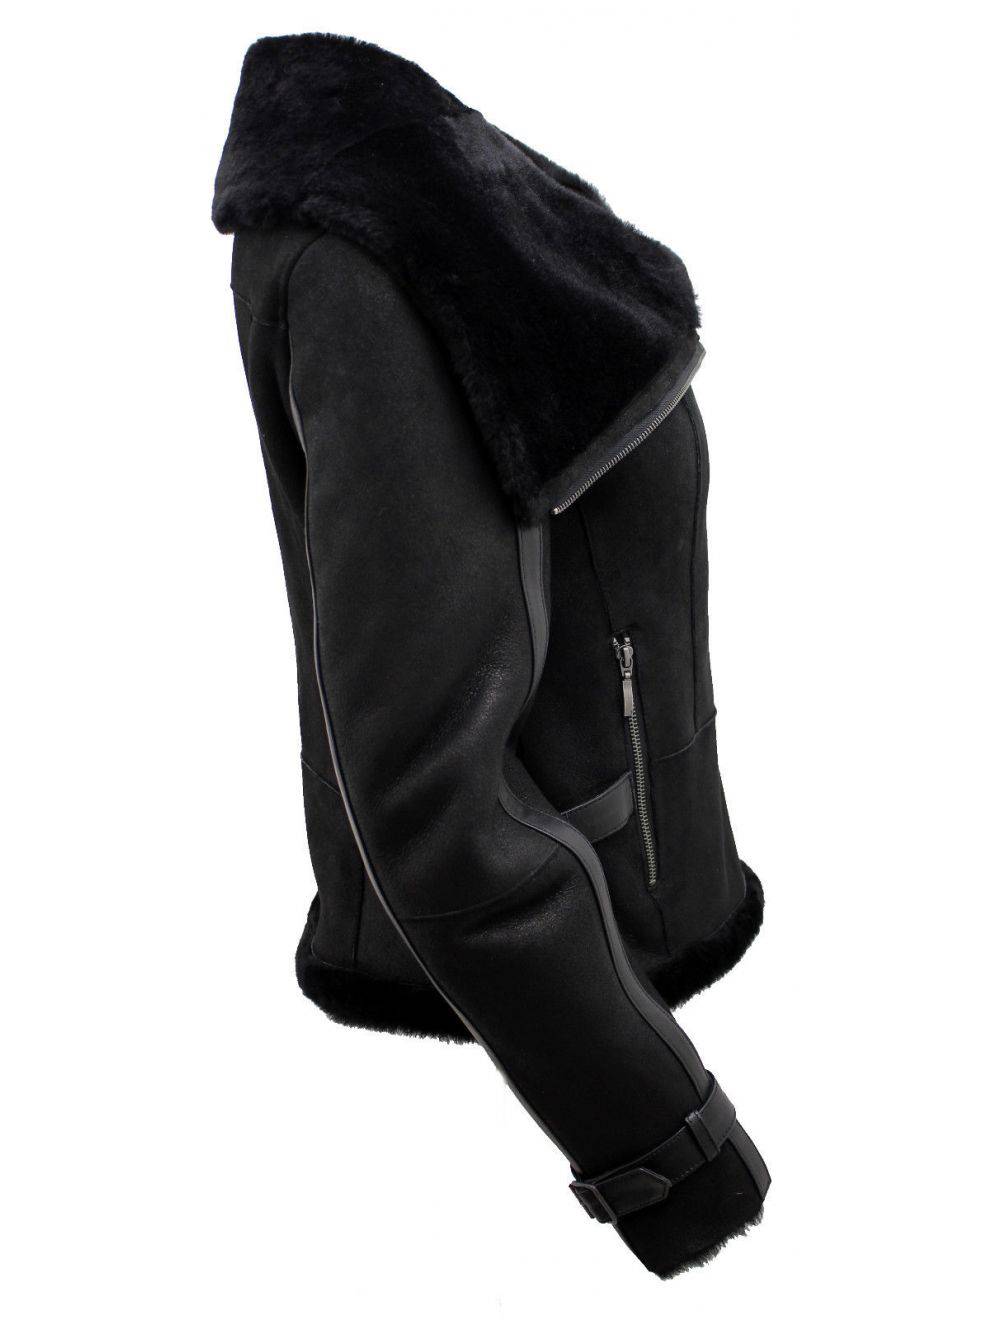 Women's Short Black Merino Sheepskin Aviator Leather Jacket- Stockton for sale - Woodcock and Cavendish